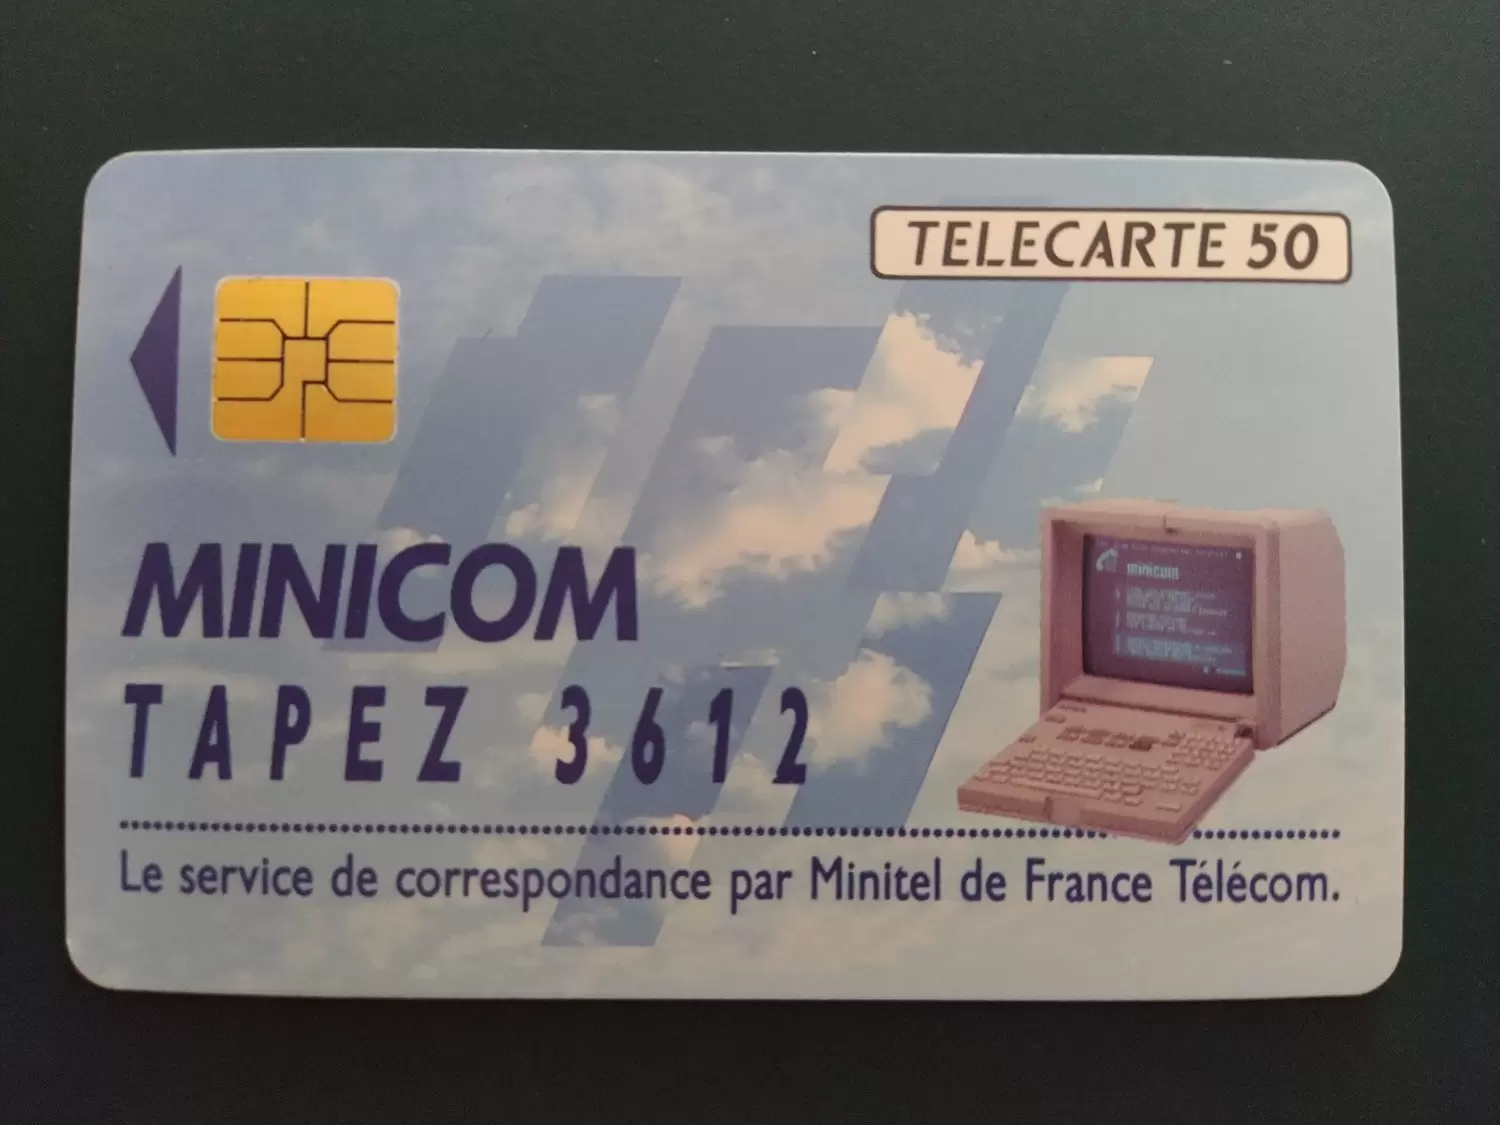 Télécartes - Minicom T50